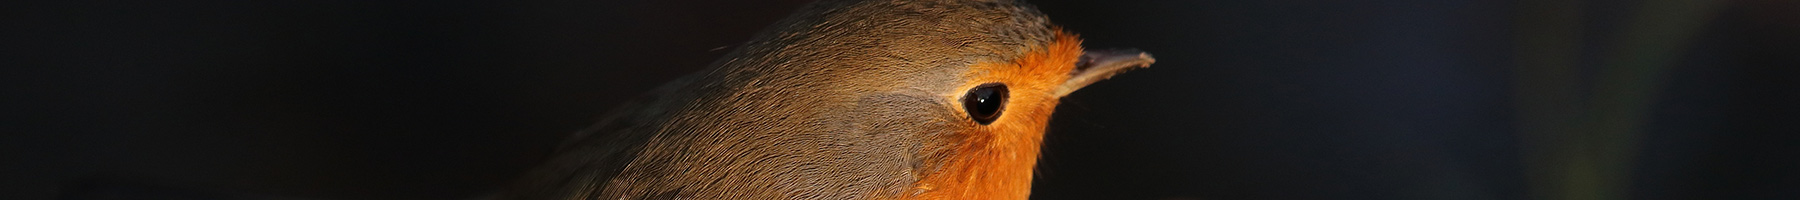 a European robin on a branch